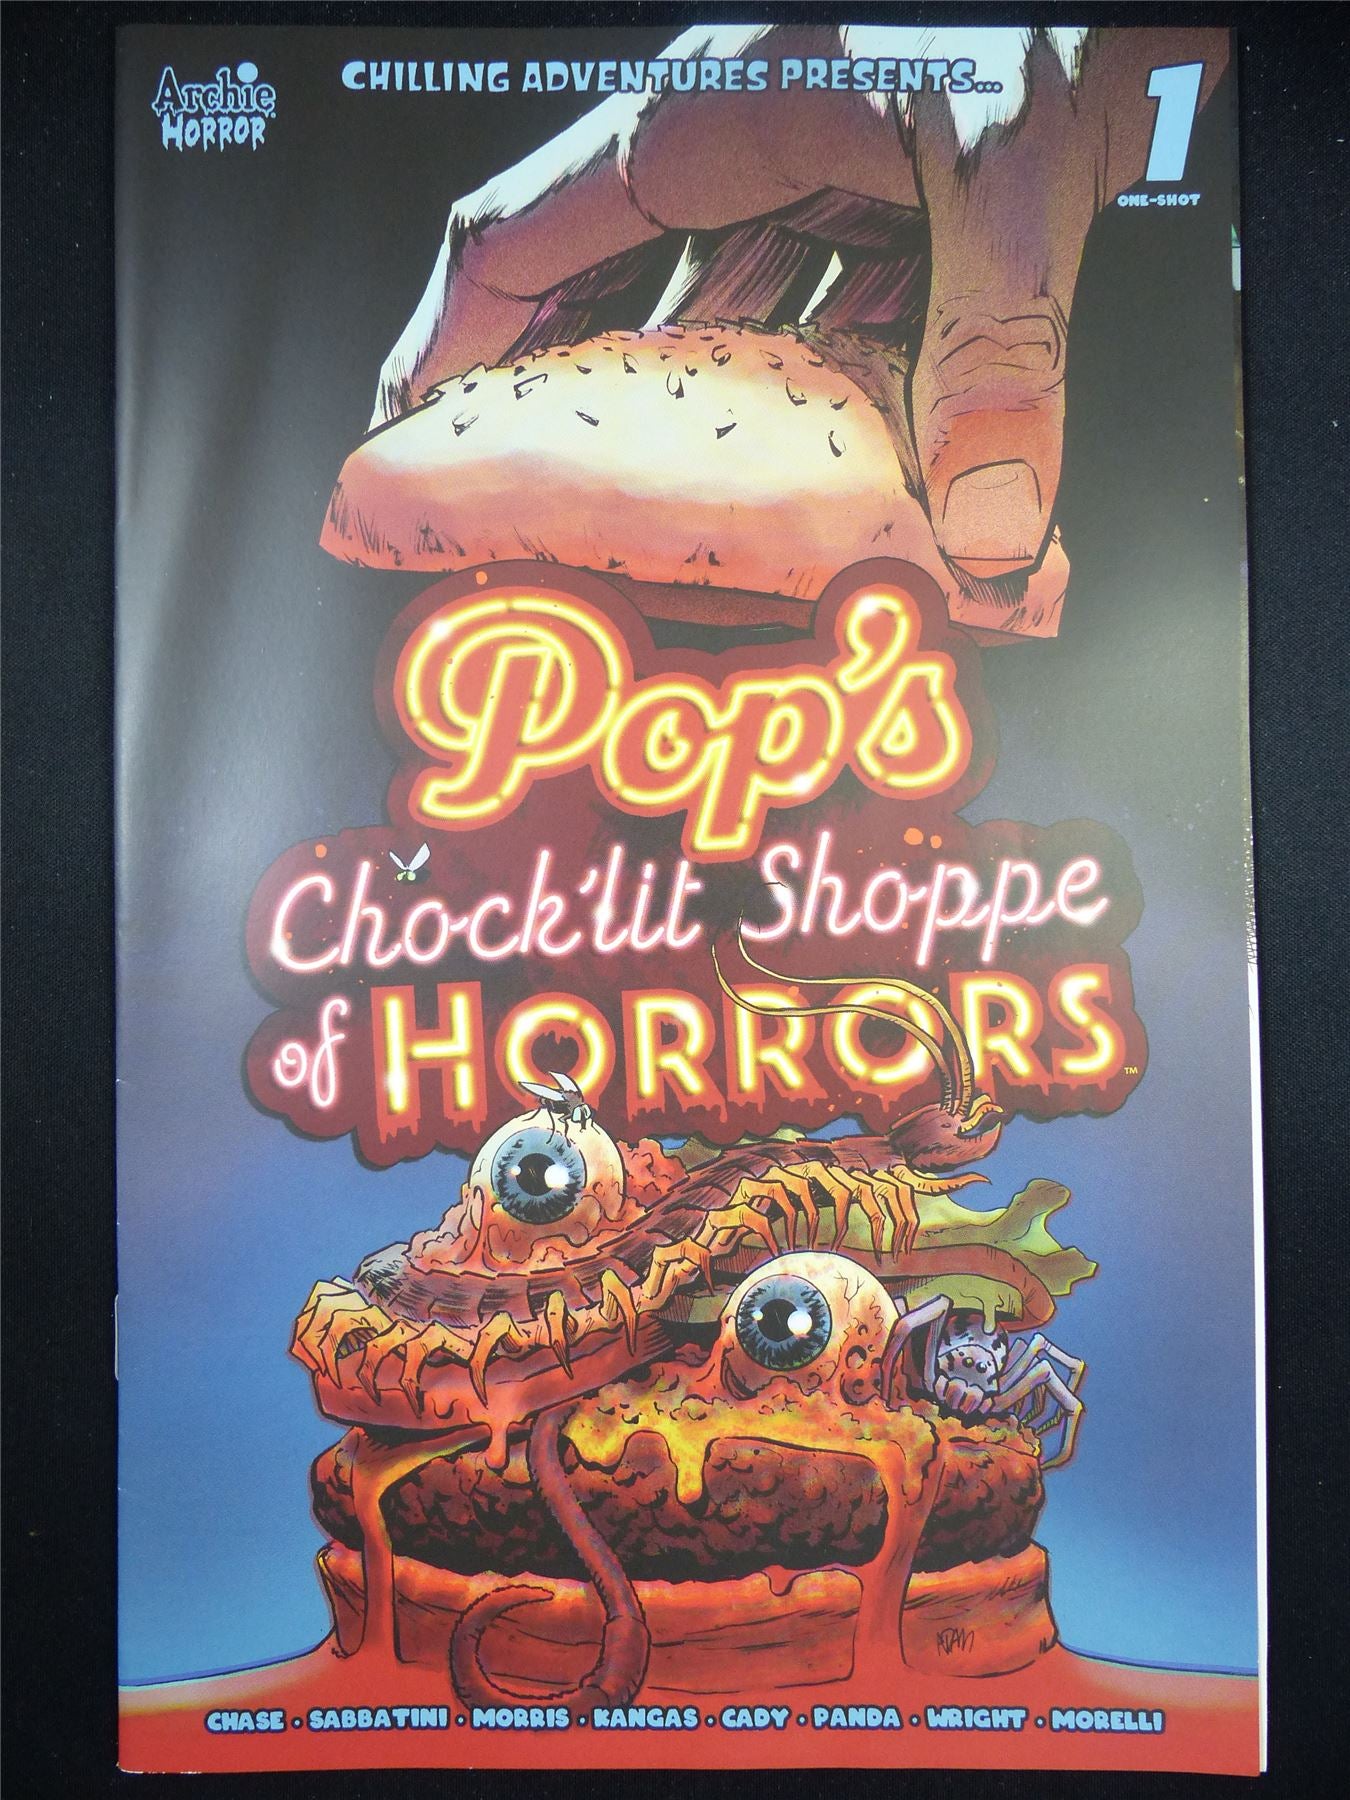 POP'S Chock'lit Shoppe of Horrors #1 - Archie Comic #1K4